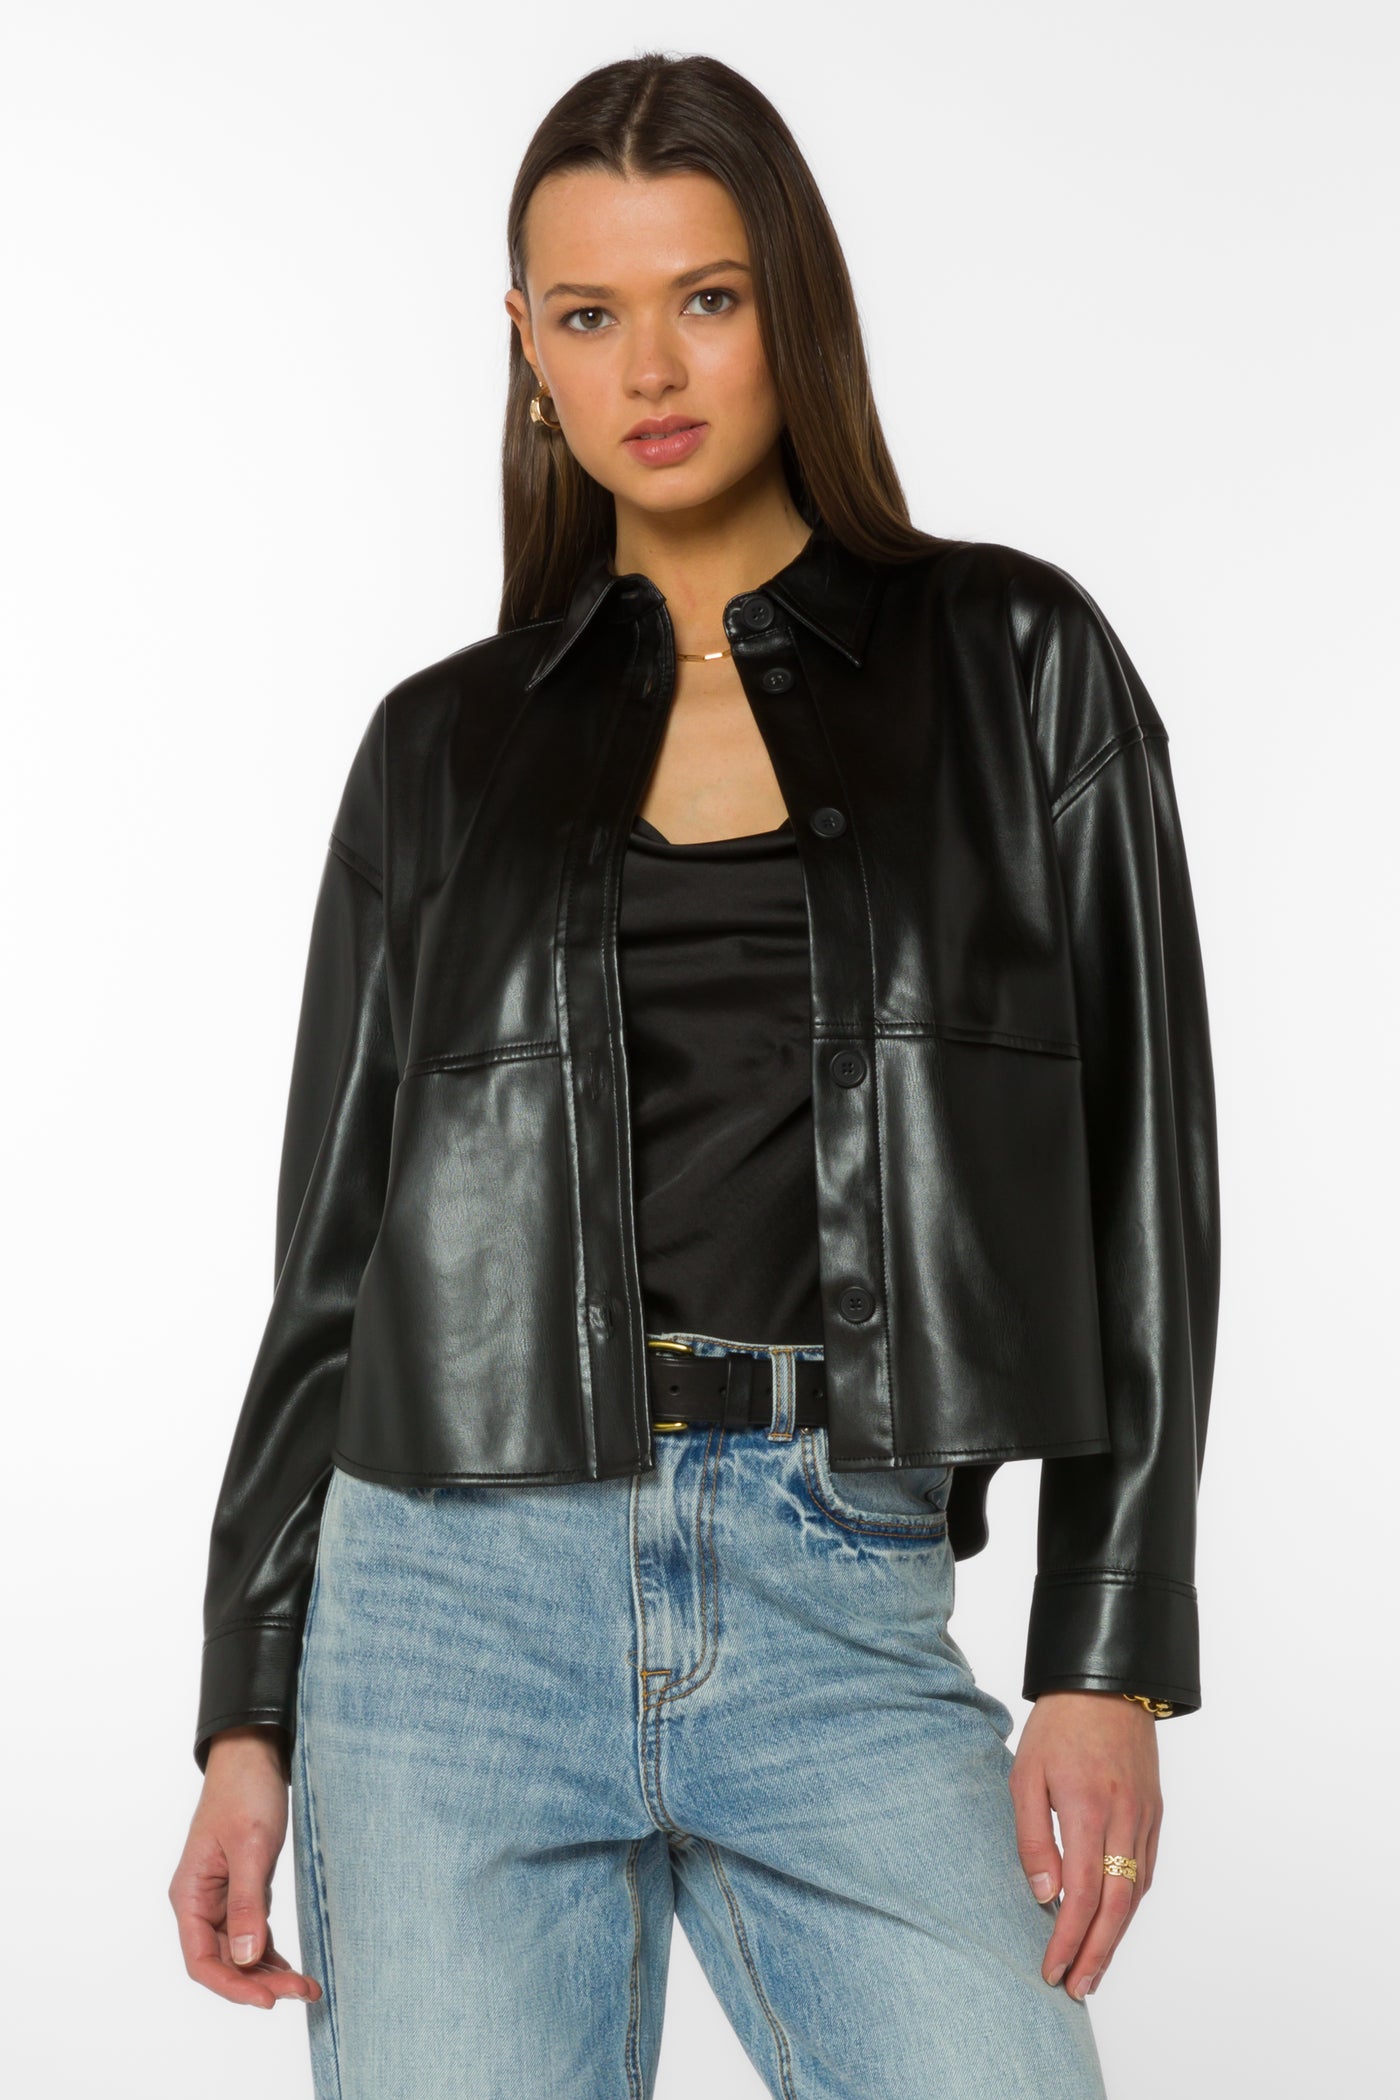 Halo Black Leather Jacket - Jackets & Outerwear - Velvet Heart Clothing